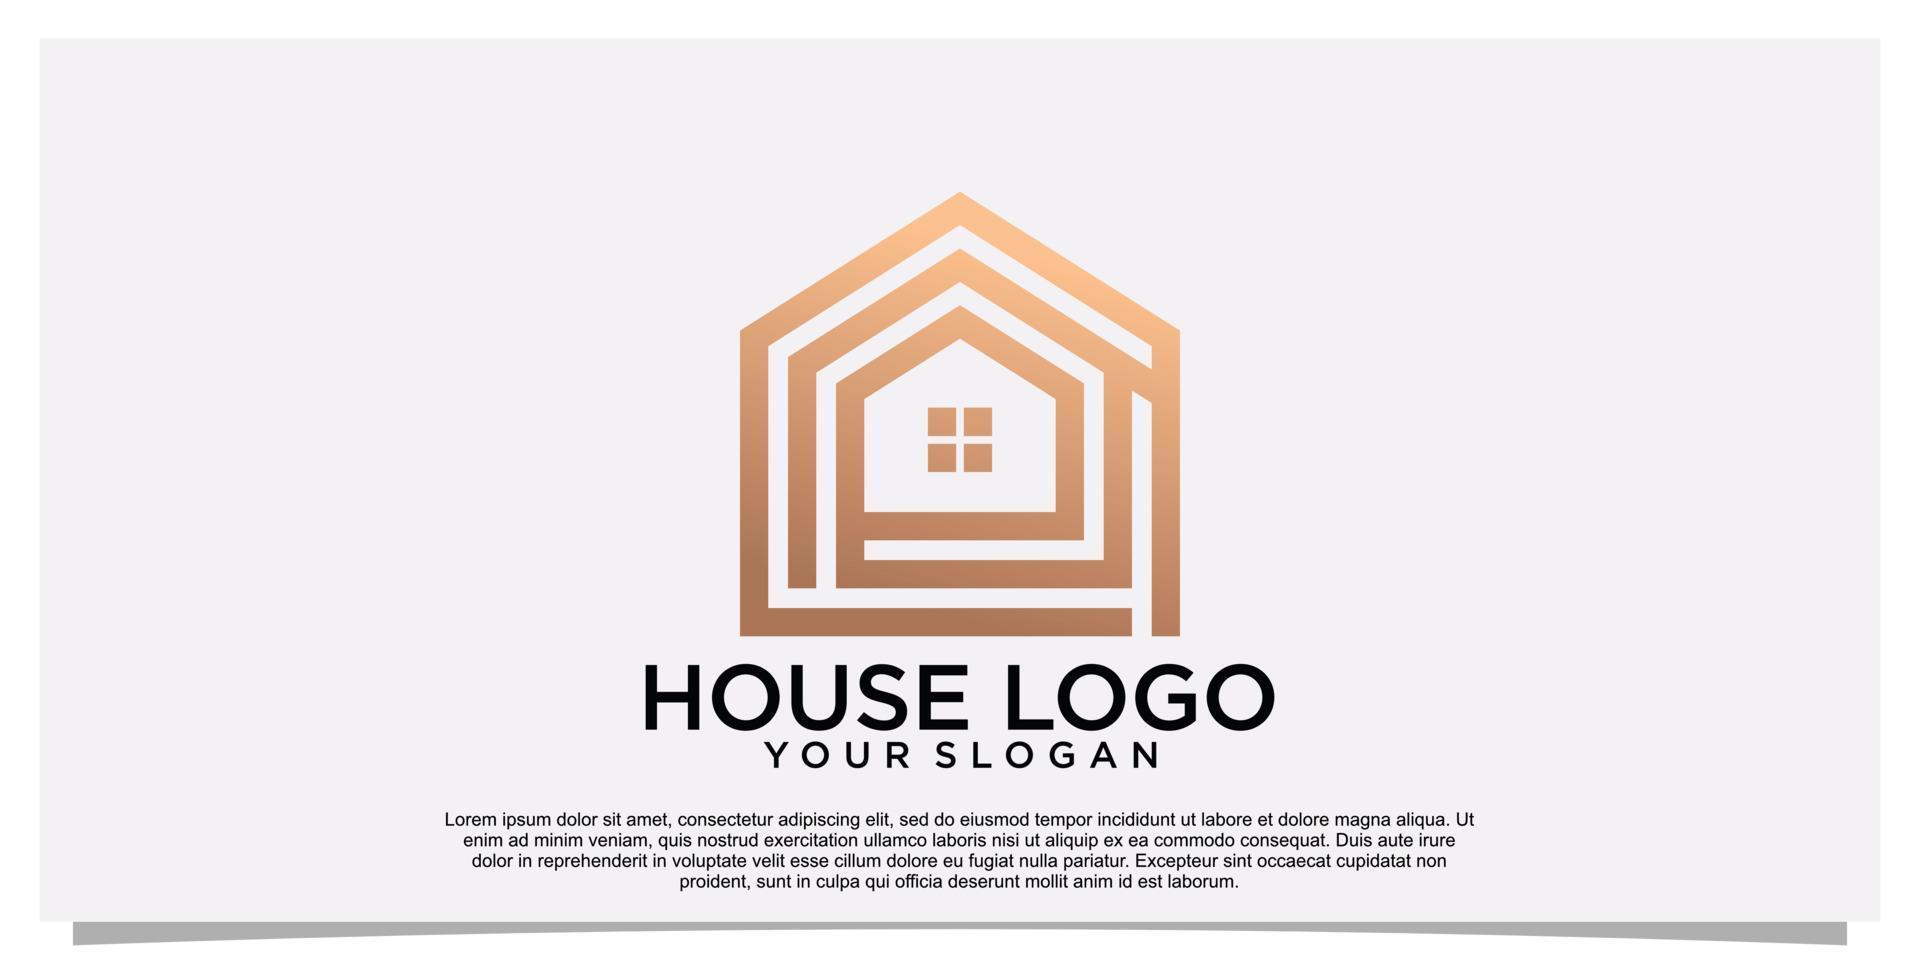 House logo design simple concept Premium Vector Part 3